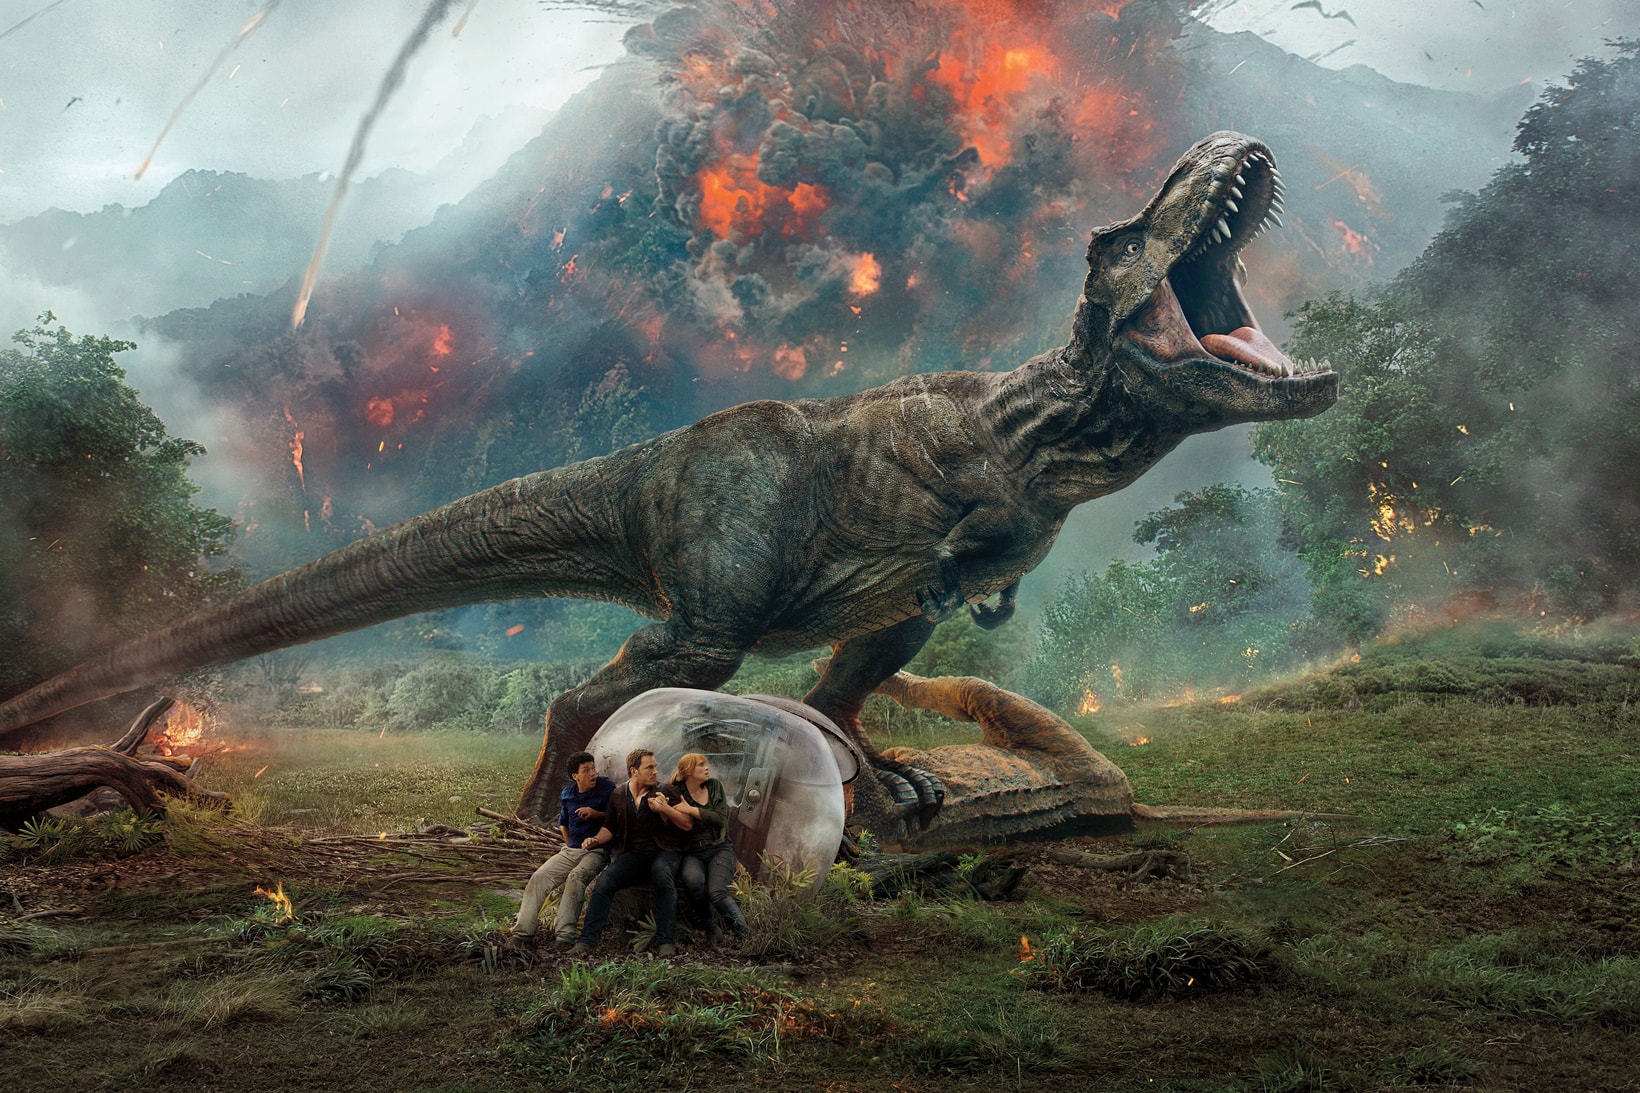 Best Films TV Shows May 2018 Videos Movies Trailers Netflix Marvel Jurassic World Fallen Kingdom